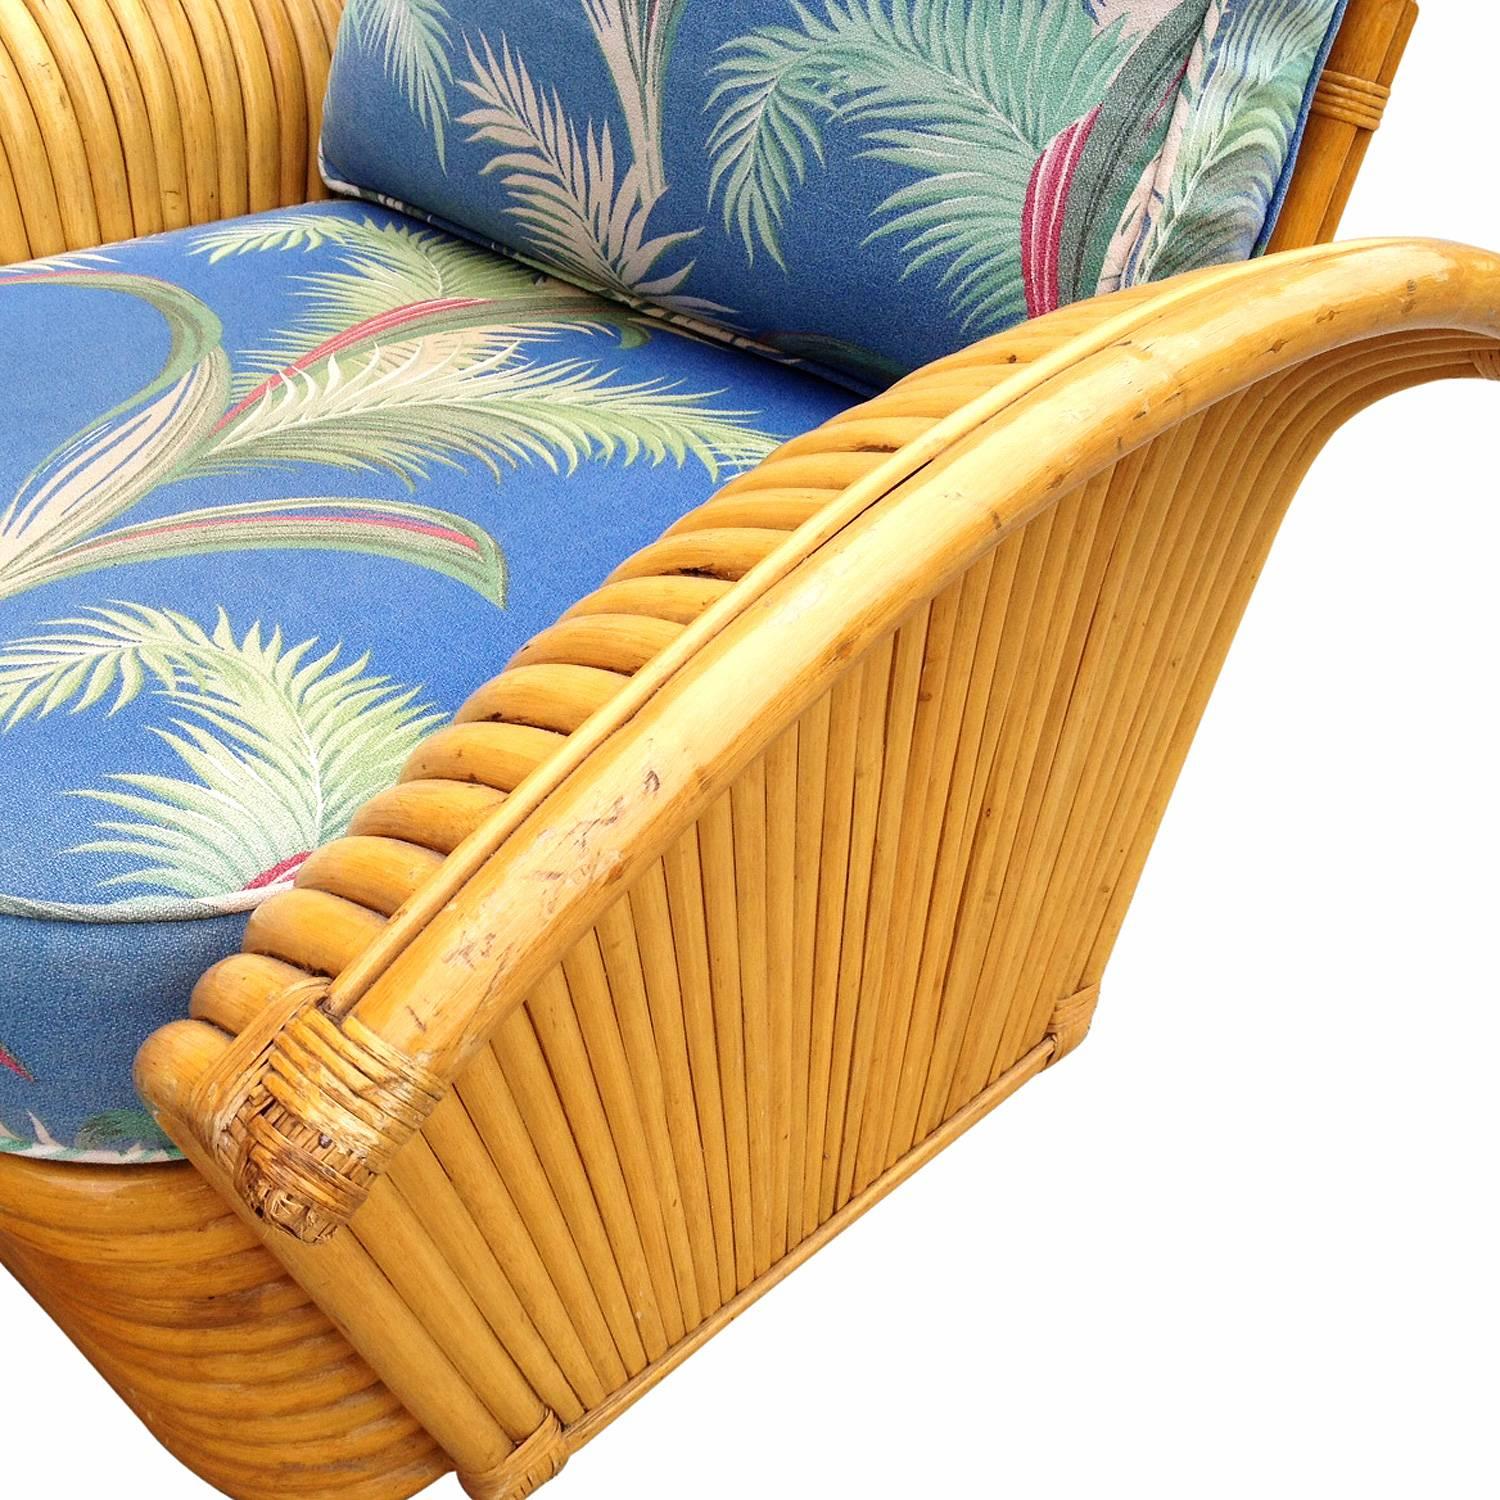 American Restored Art Deco Rattan Fan Arm Lounge Chair with Ottoman, Super Rare